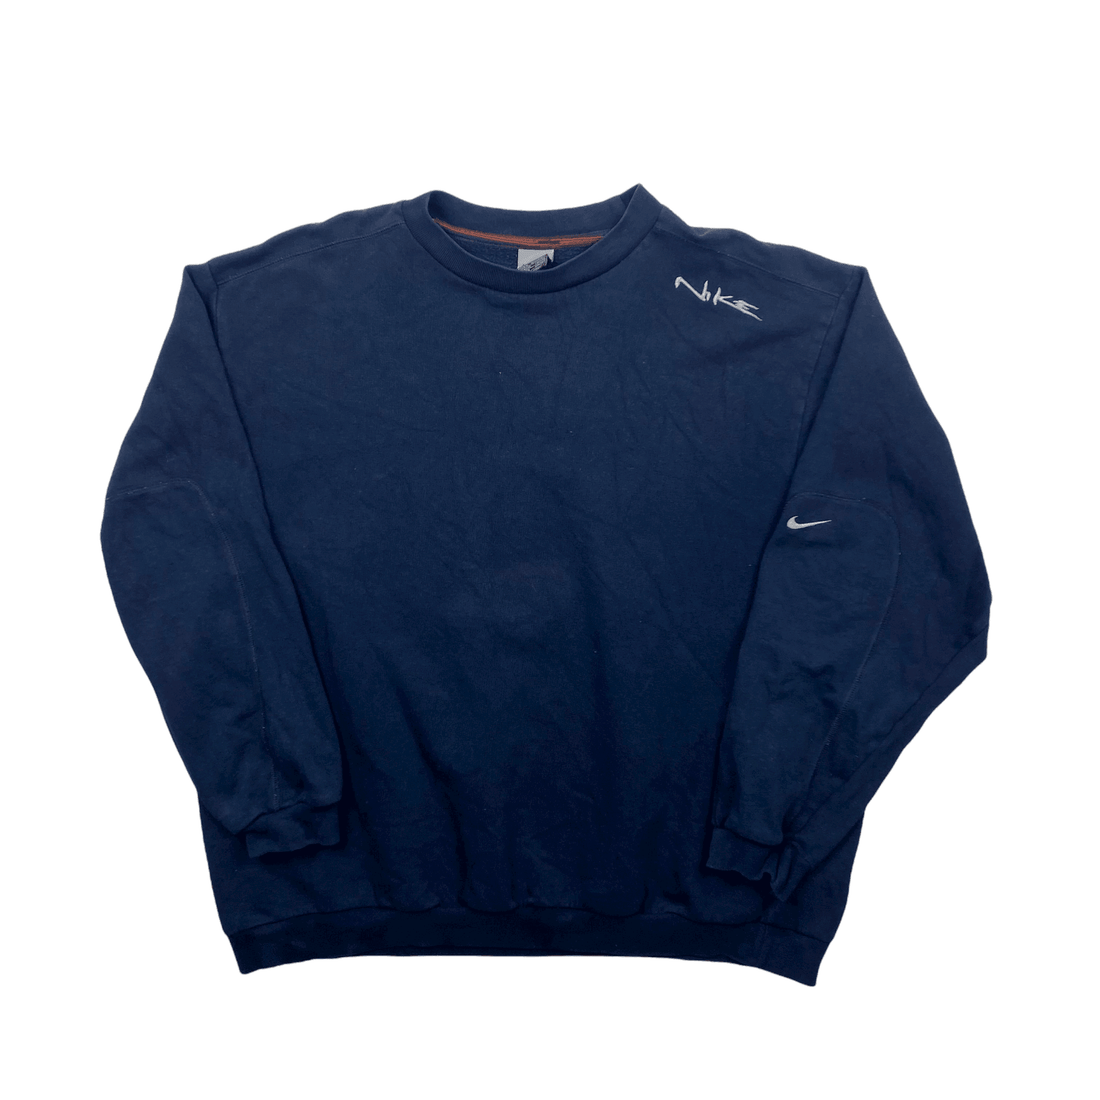 Vintage 90s Navy Blue Nike Spell-Out Sweatshirt - Extra Large - The Streetwear Studio